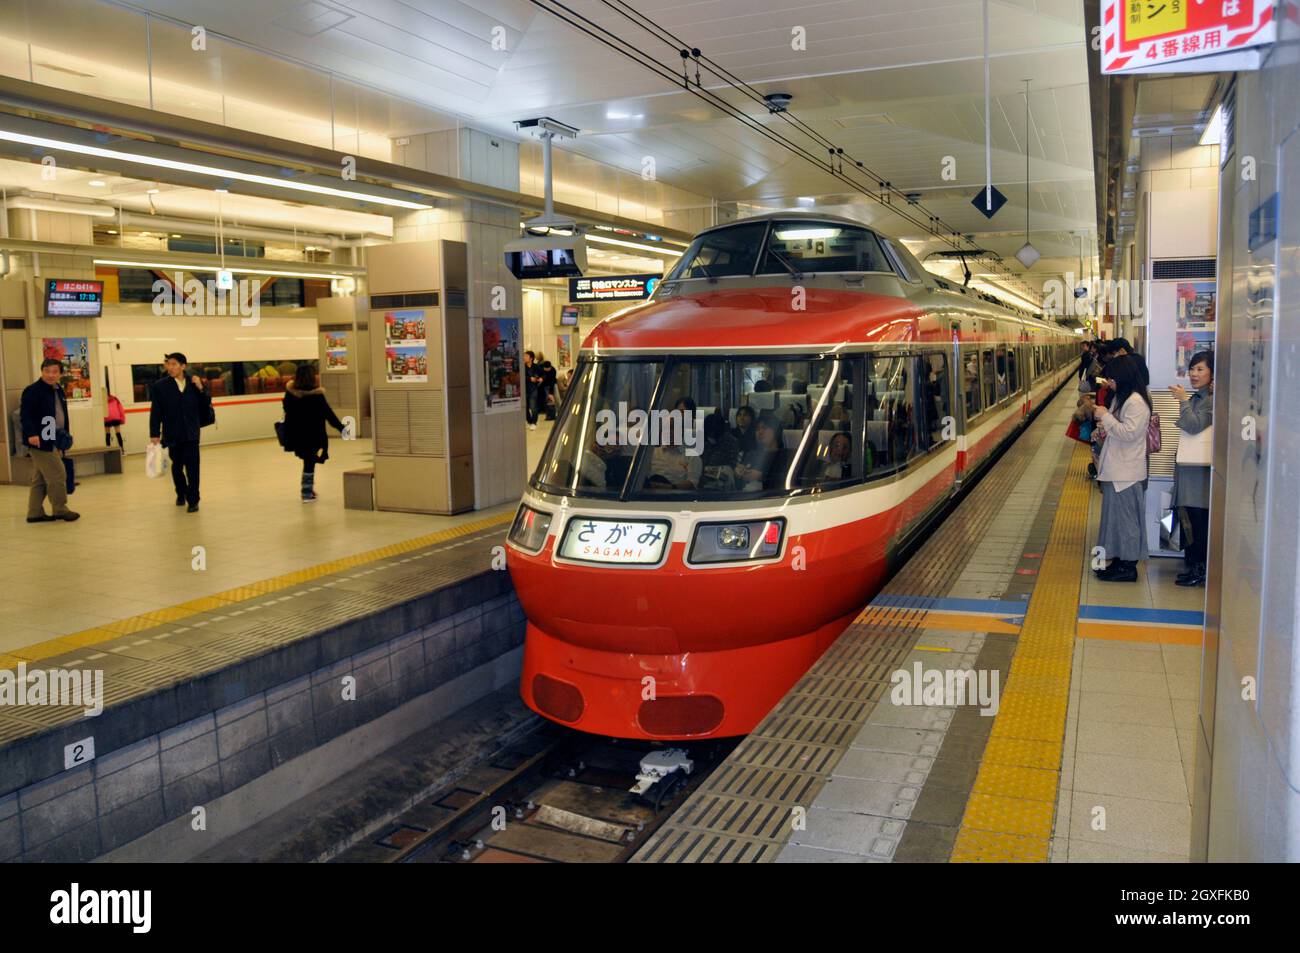 Express train arrives at a platform in the Enoshima train station, Enoshima, Japan Stock Photo